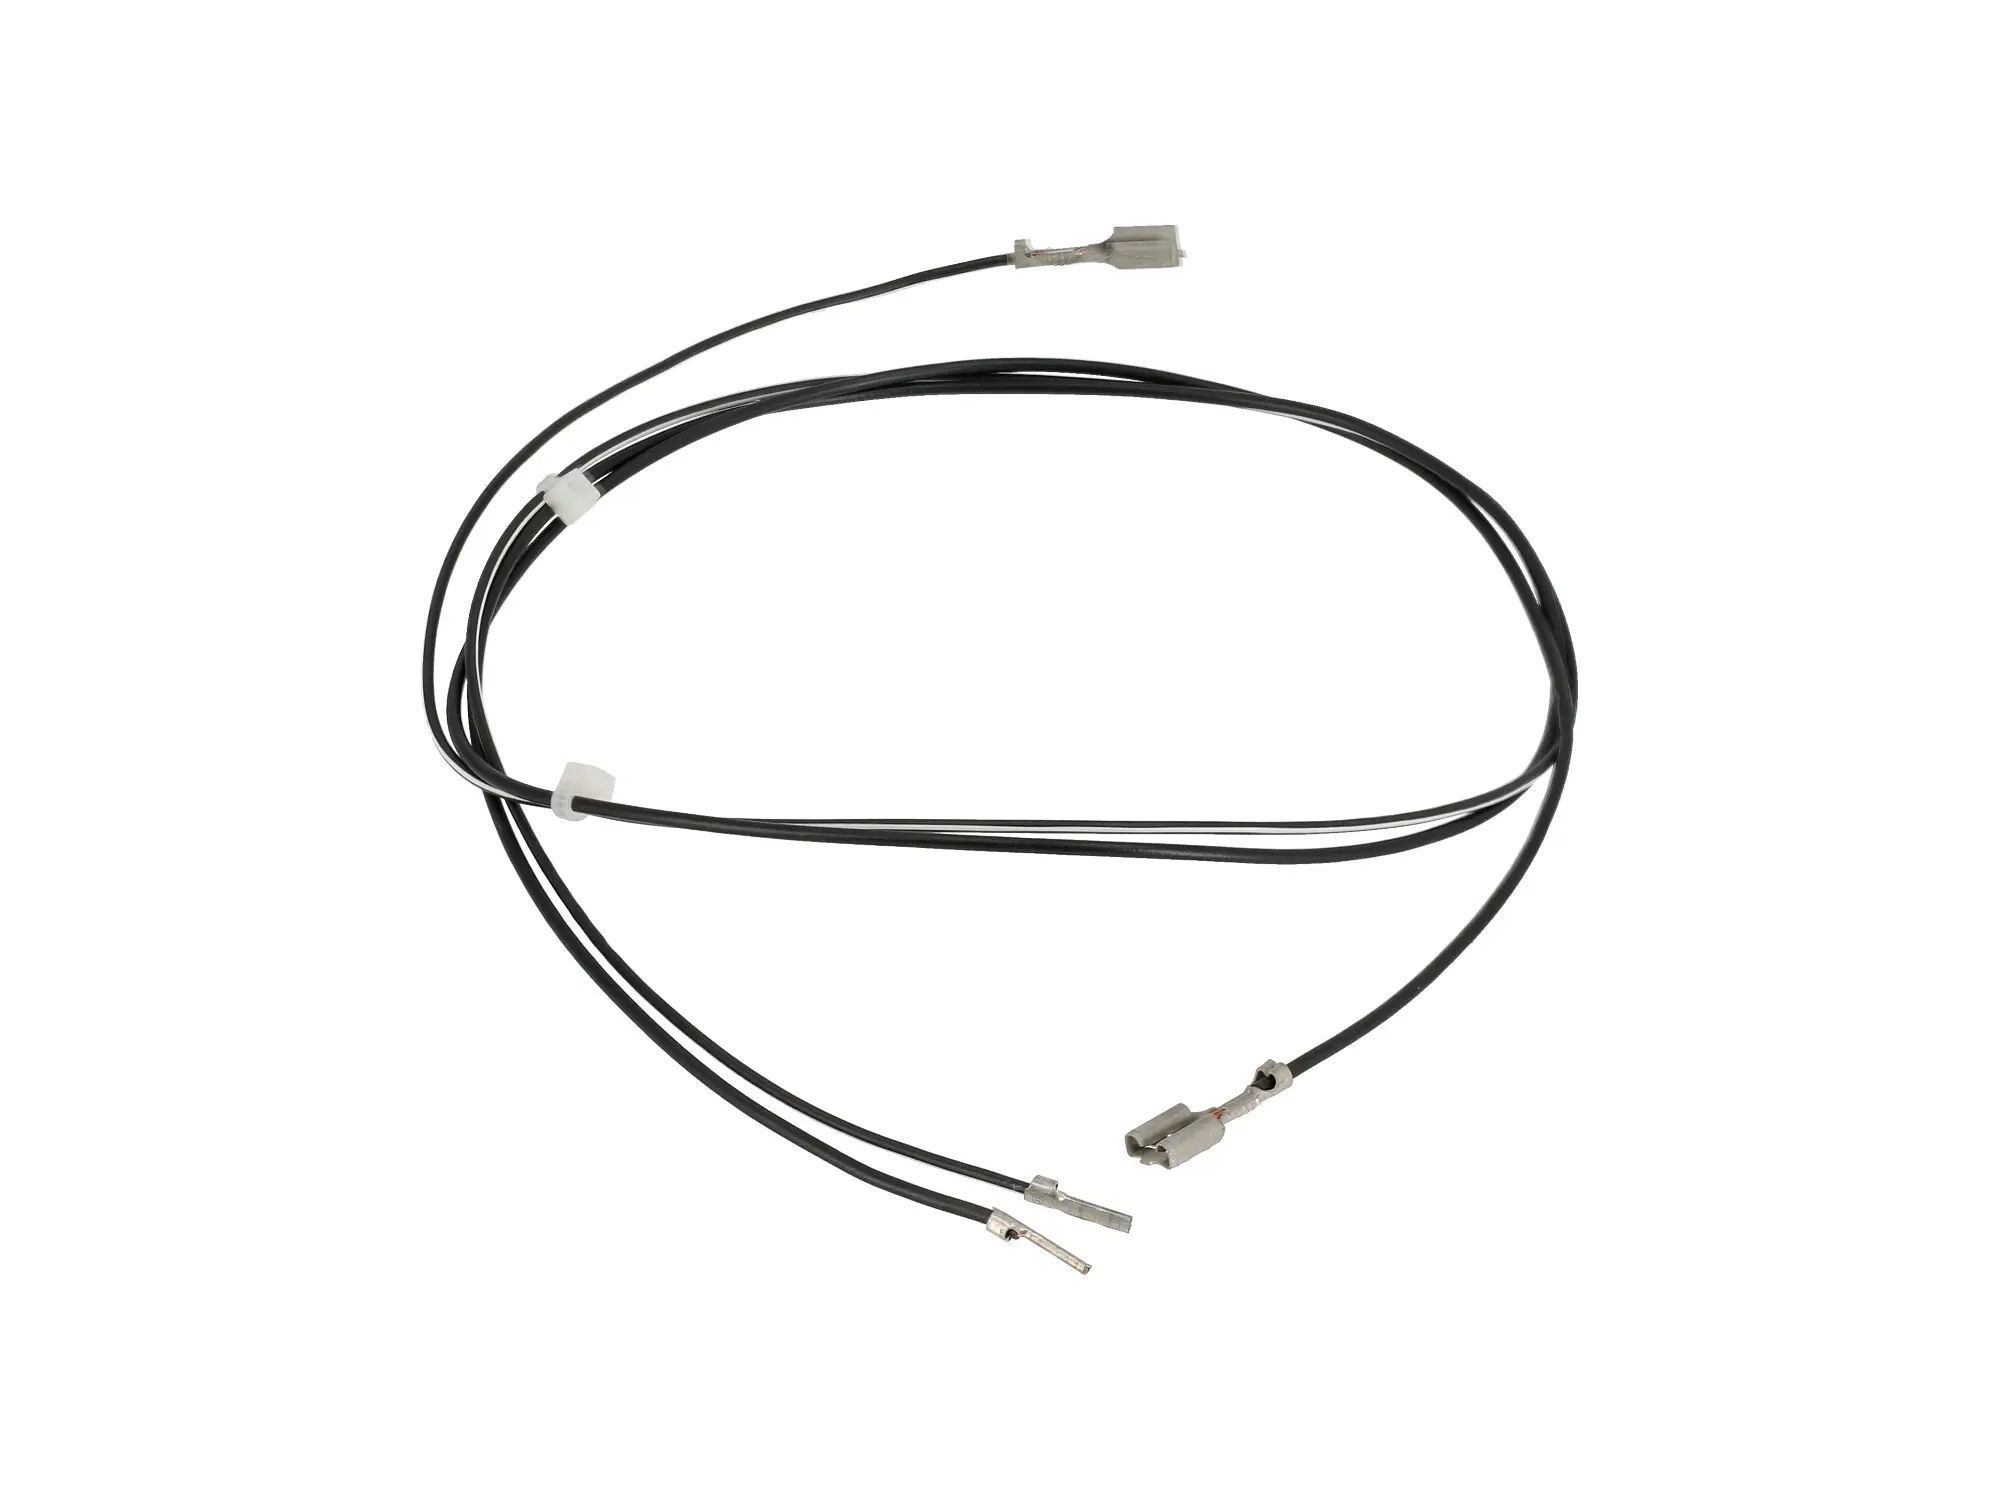 Cable for flashing light, front left - SR50B, C, CE, SR80 CE, Item no: 10065125 - Image 1